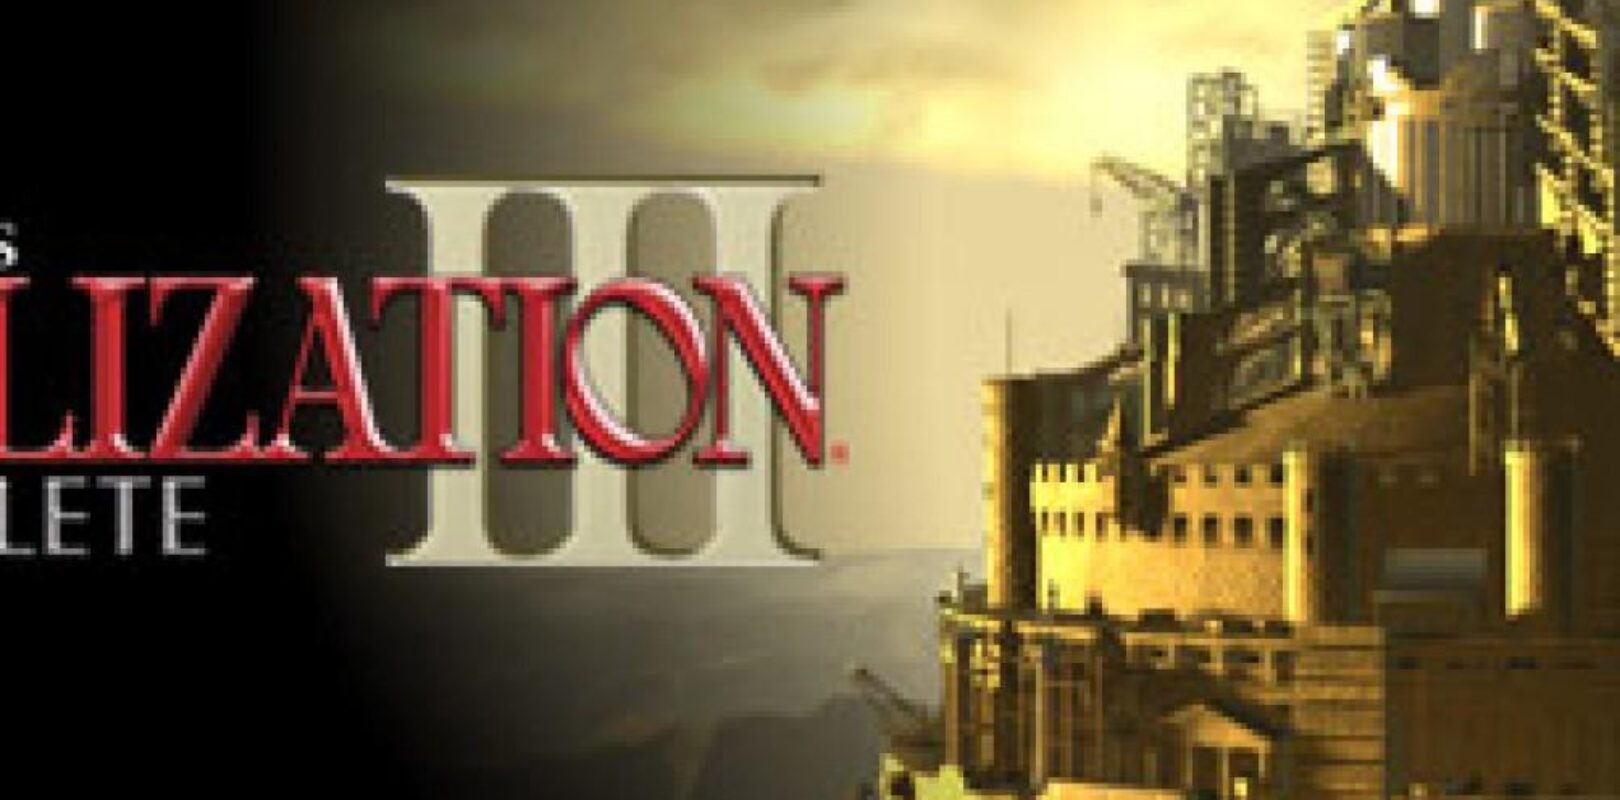 download civilization 3 free full version